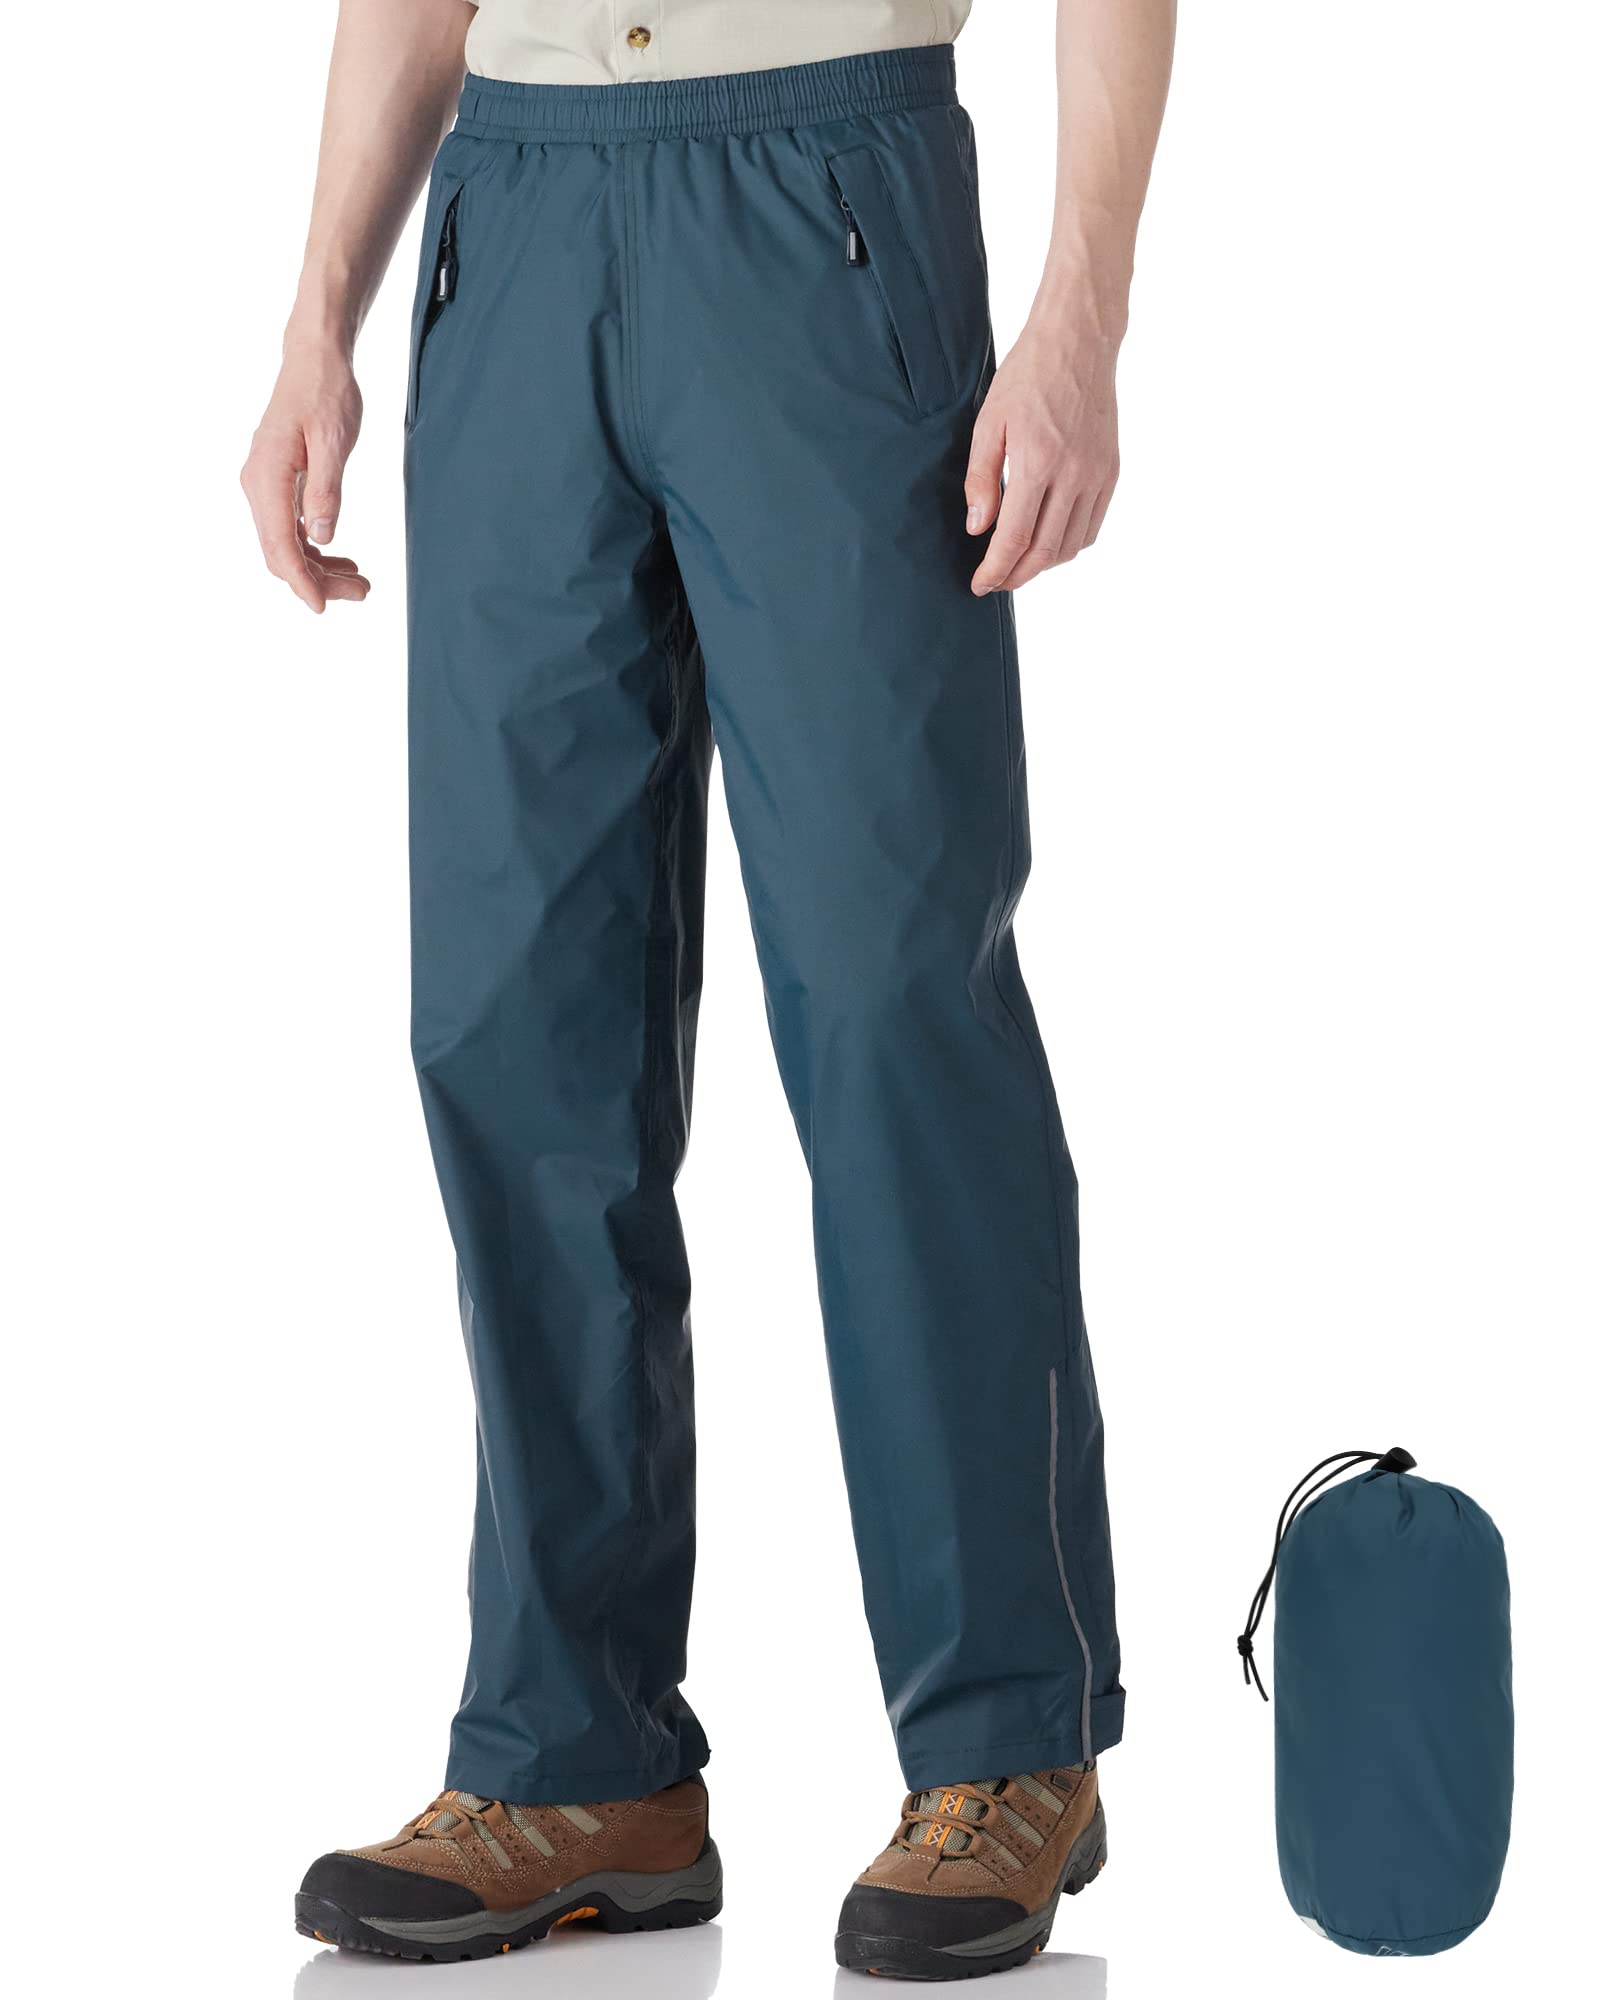 Outdoor Ventures Men's Rain Pants Waterproof Rain Overall Pants Windproof Packable Rain Outdoor Pants for Hiking Fishig Golf Blu